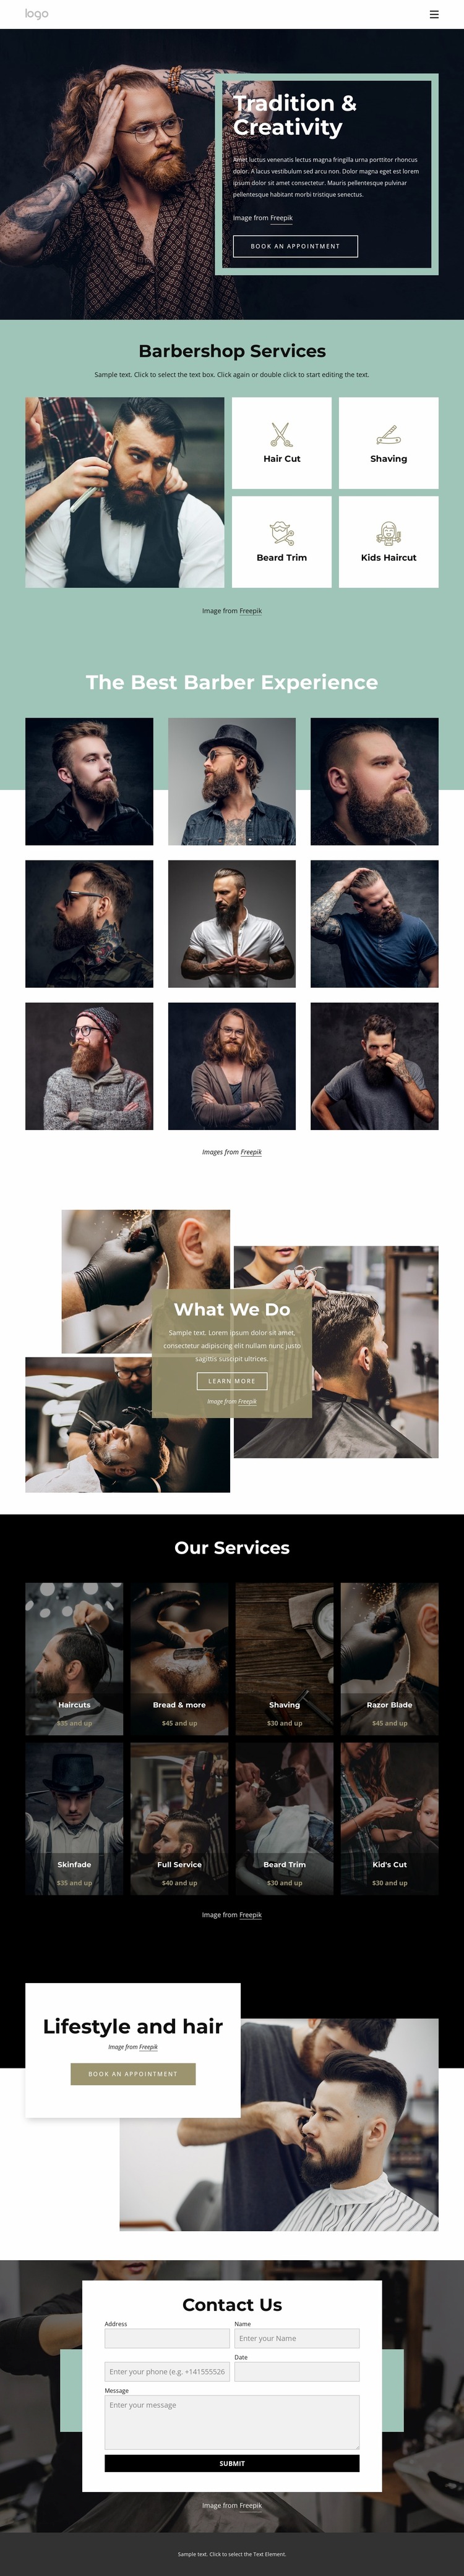 Public barber salon Website Mockup